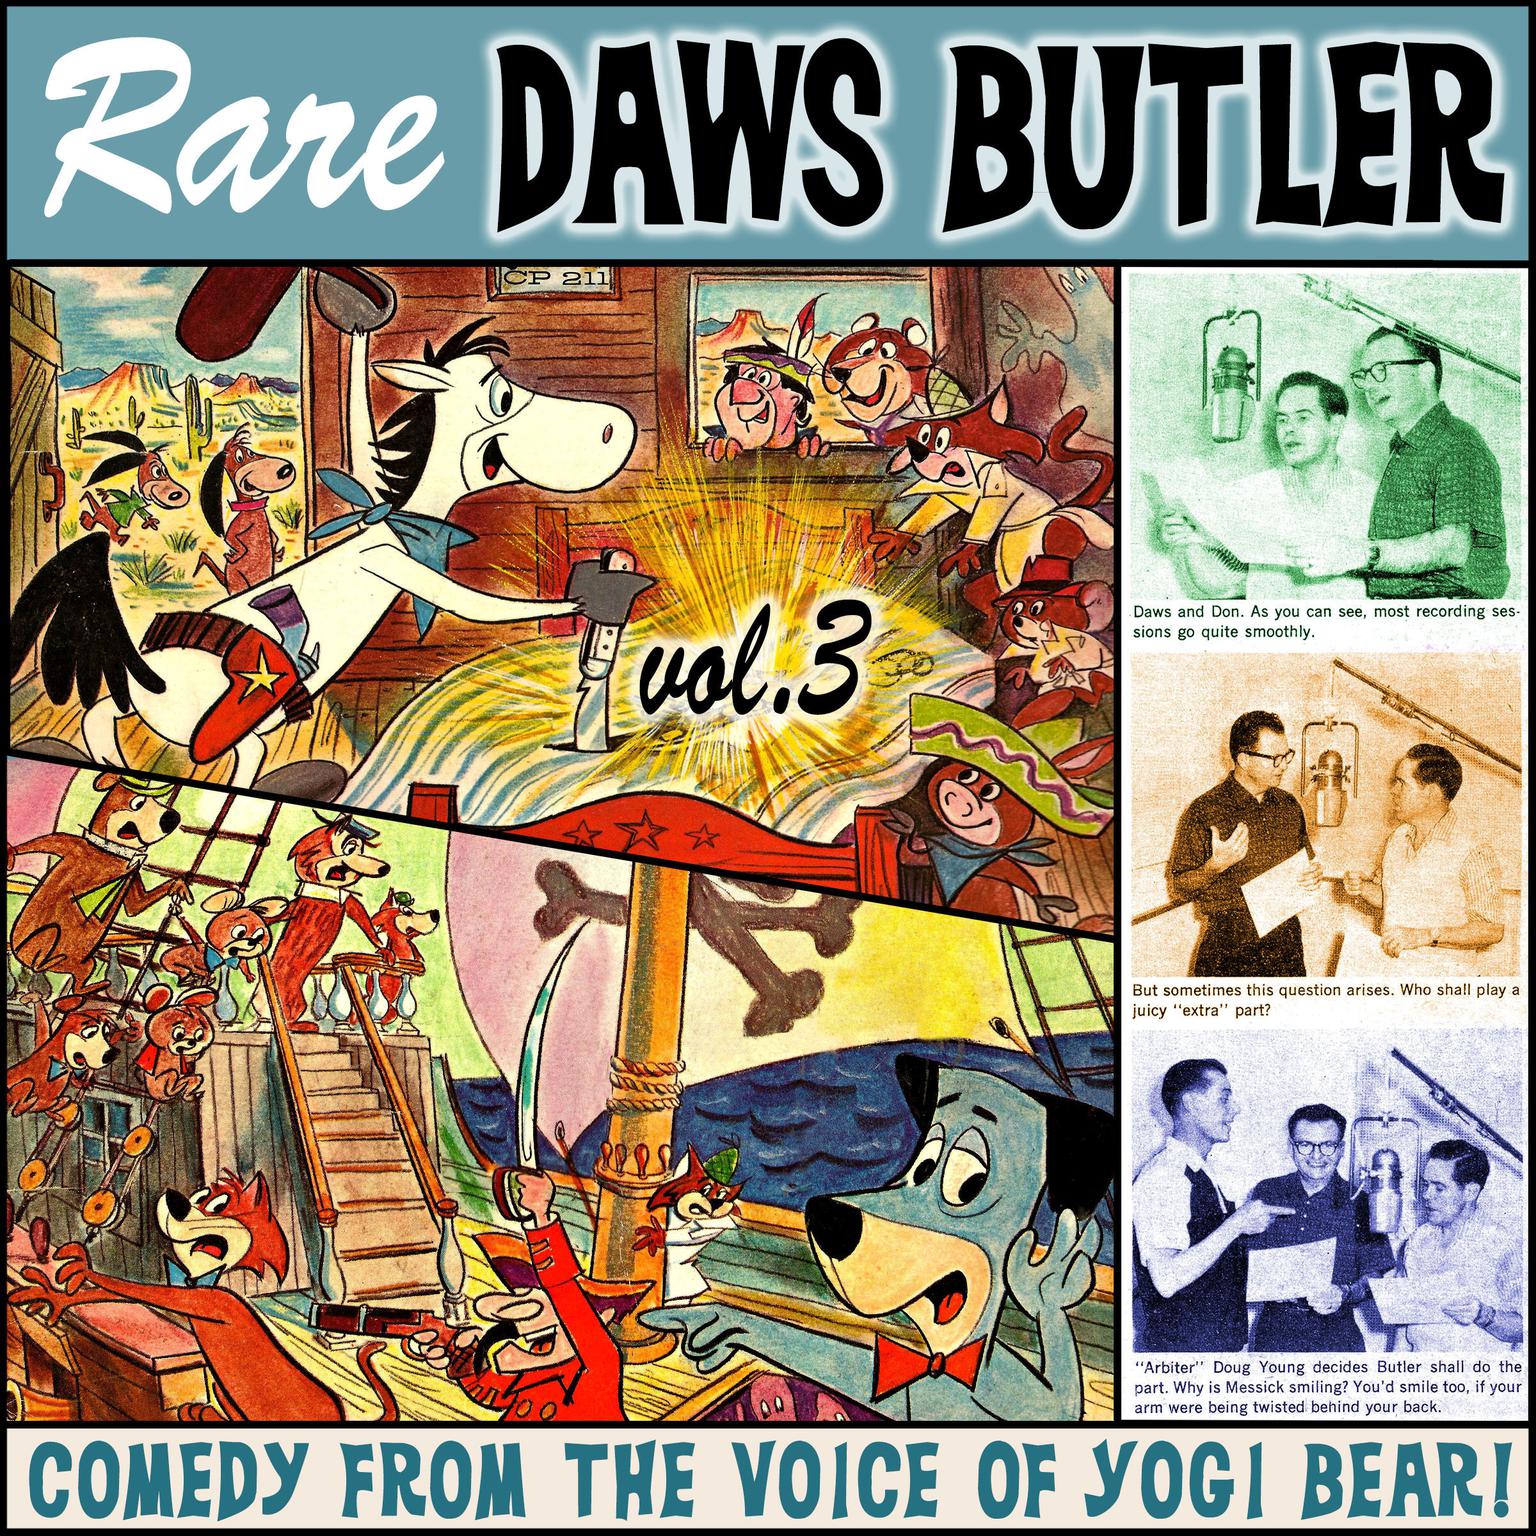 Rare Daws Butler, Vol. 3 Audiobook, by Charles Dawson Butler